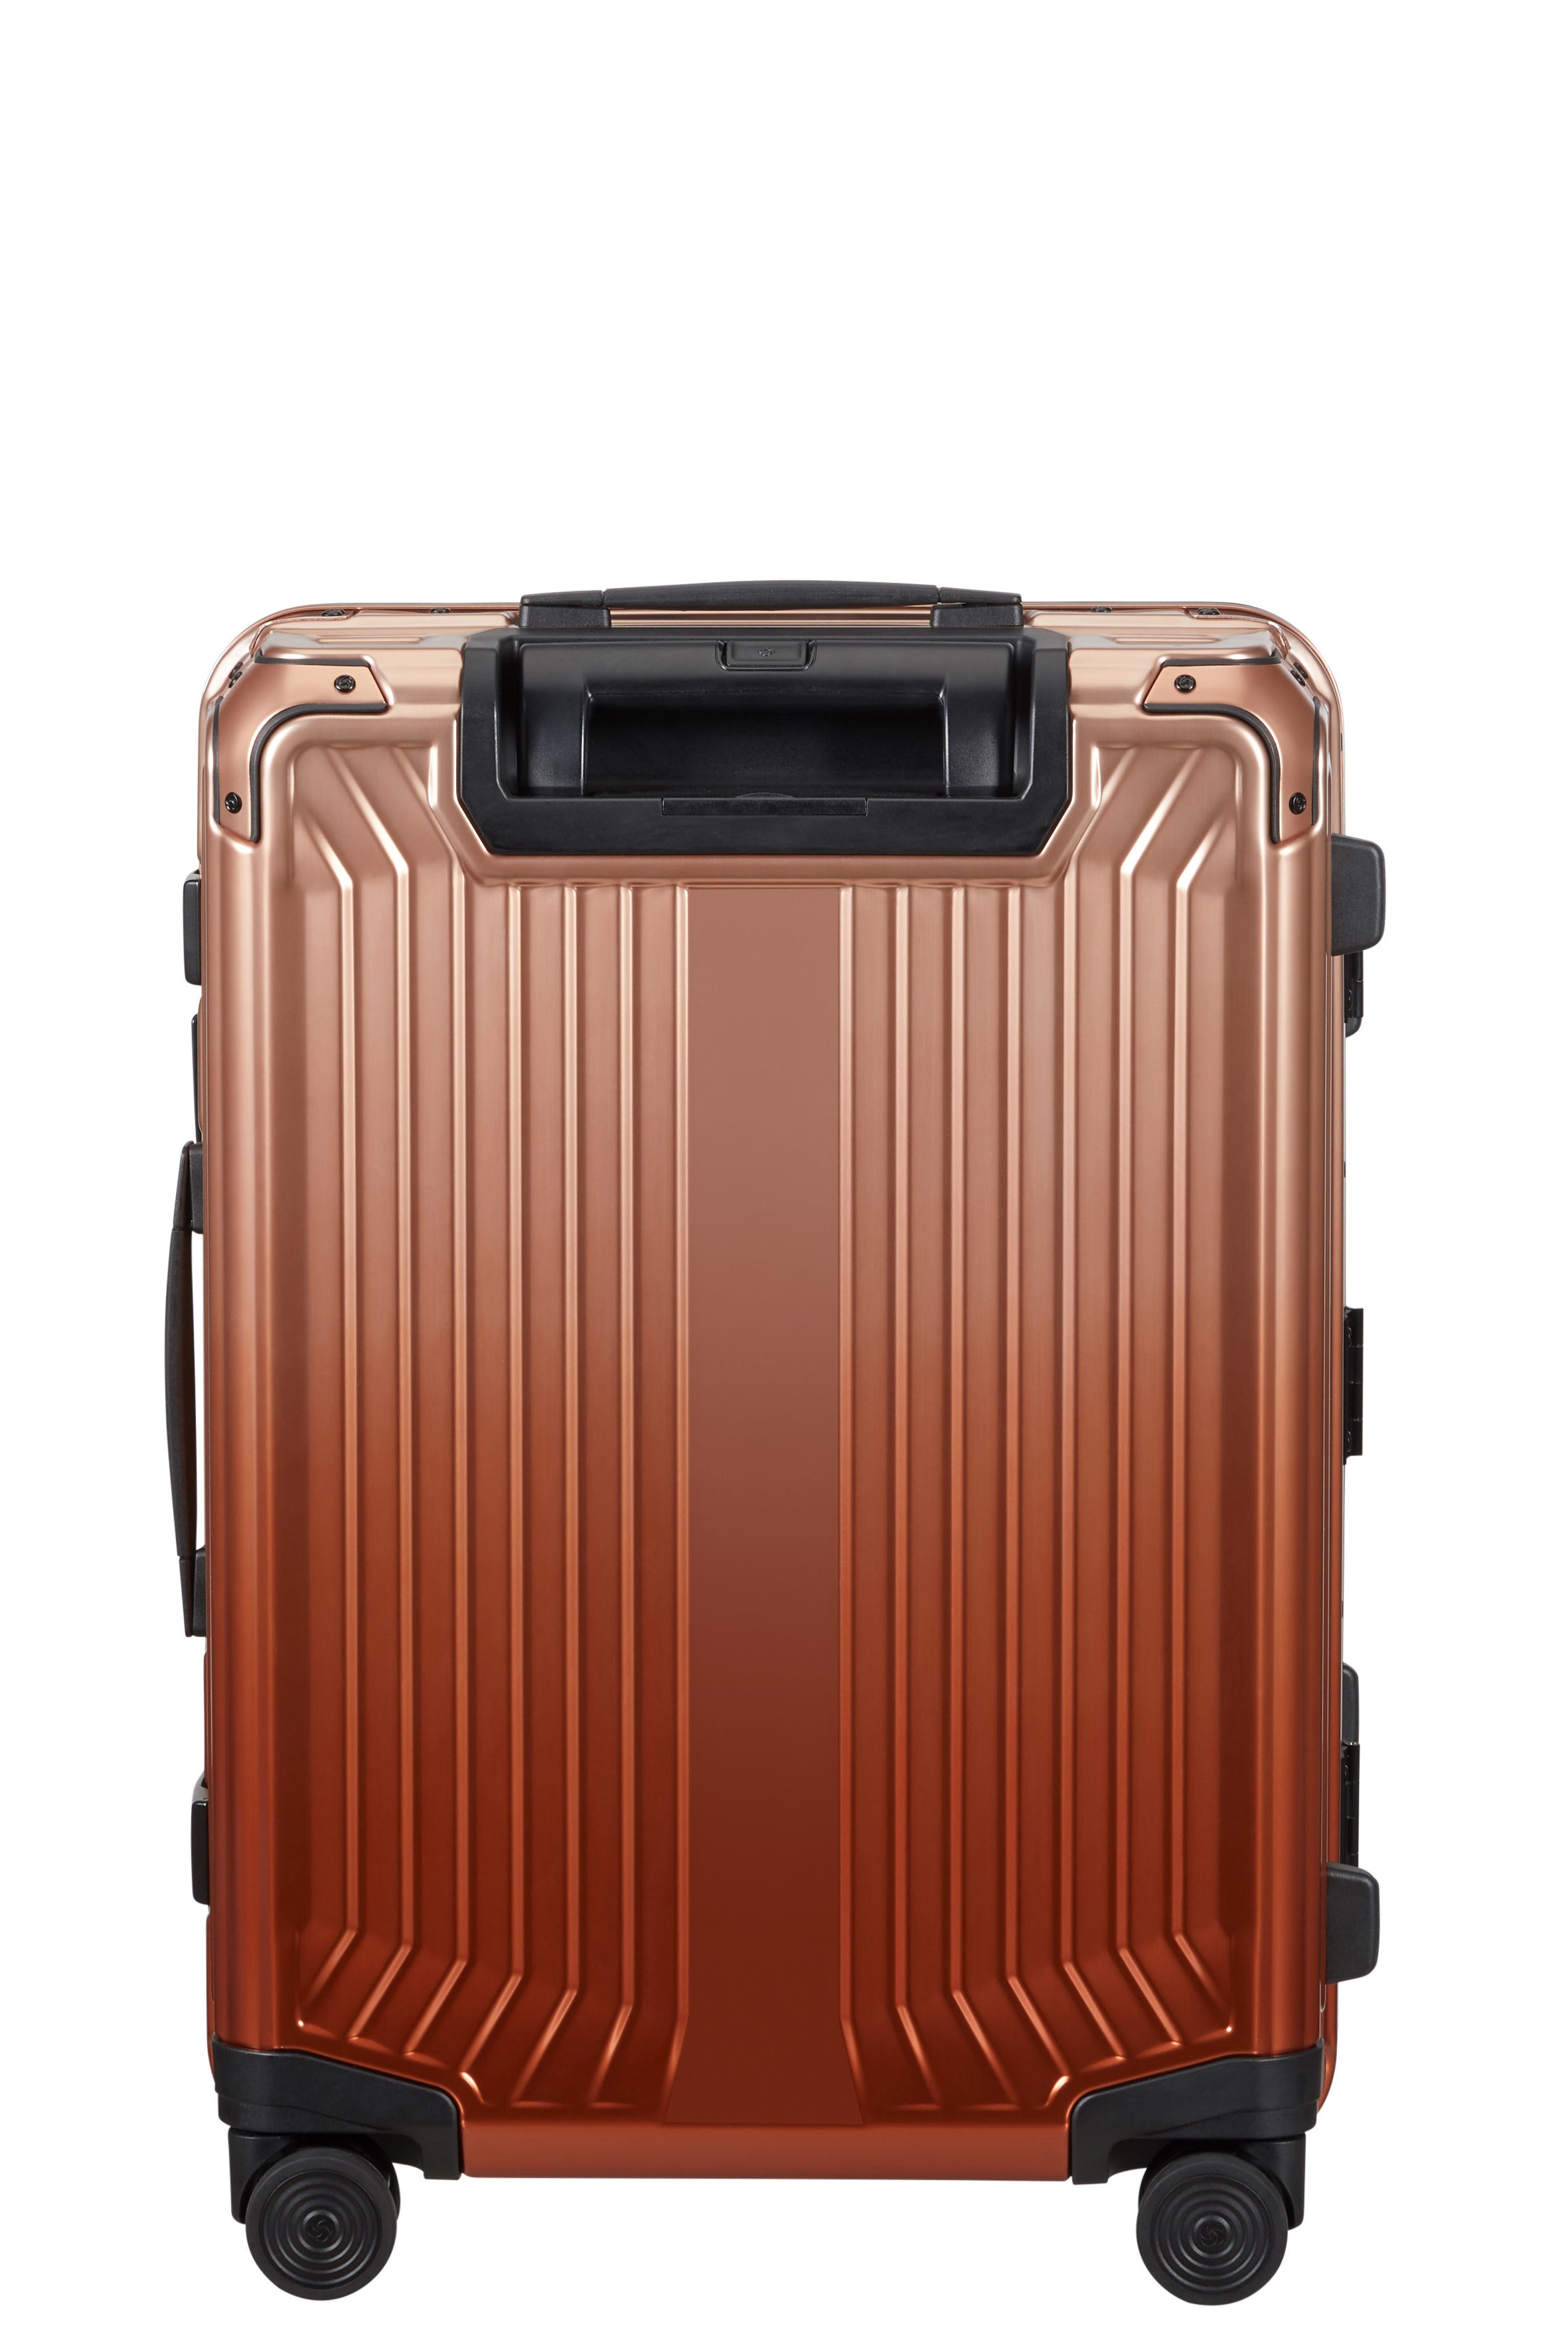 Samsonite - Lite Box ALU 55cm Small 4 Wheel Hard Suitcase - Gradient Copper - 0